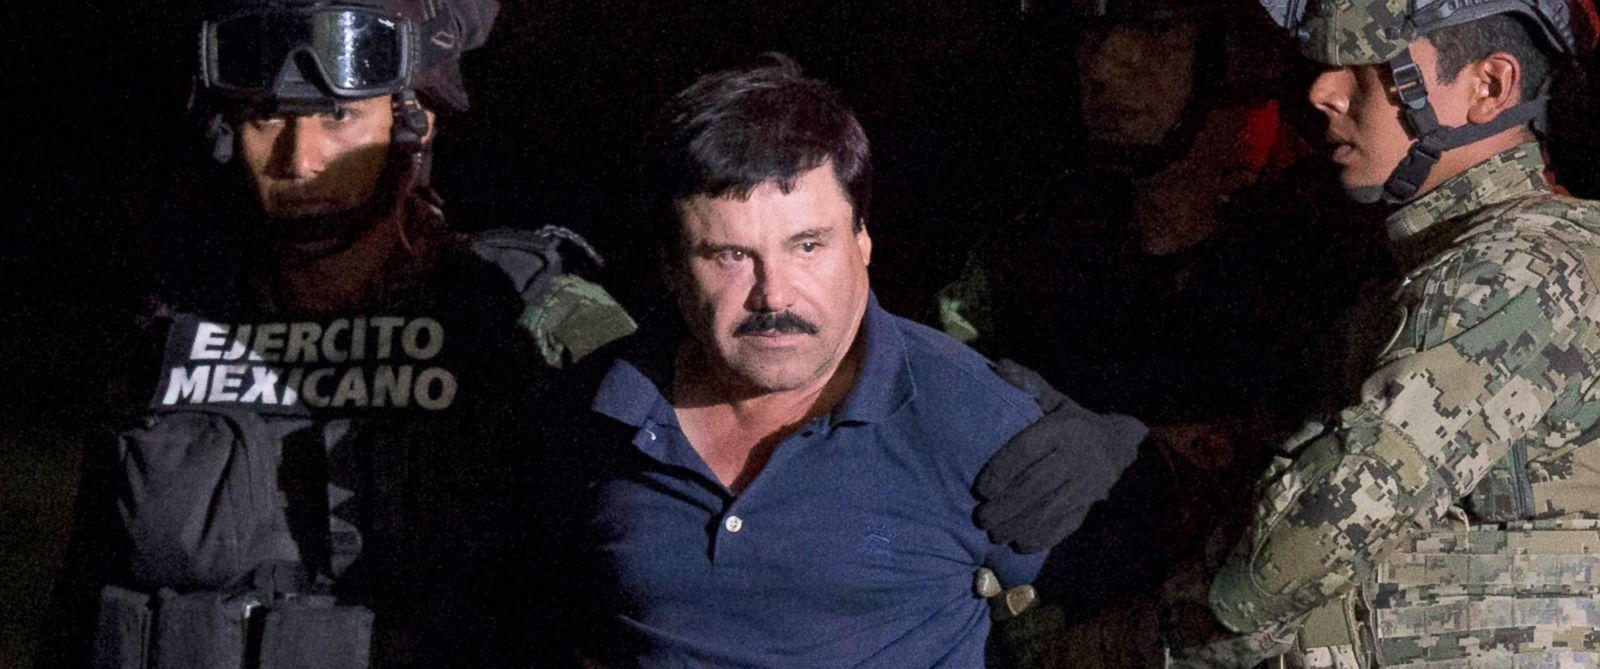 Vida de El Chapo vai virar série de TV